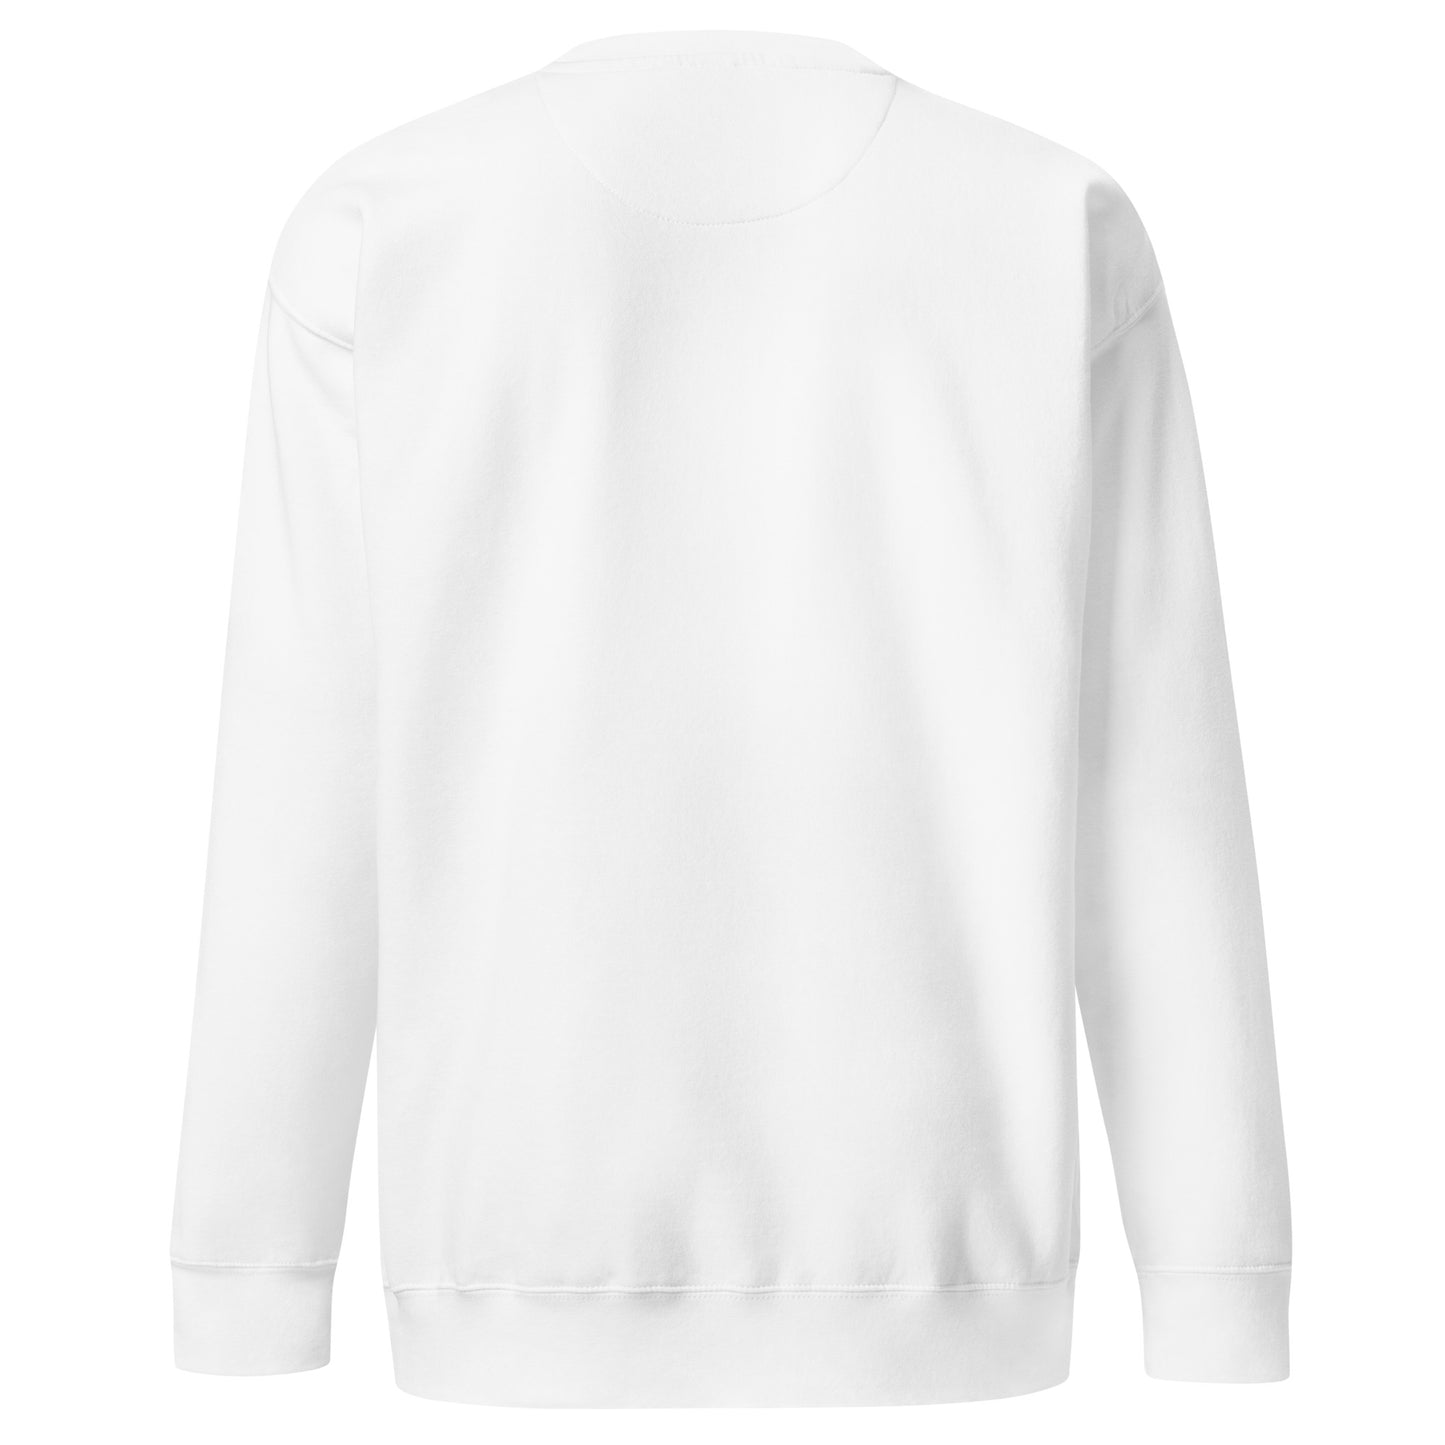 ARTIST Sweatshirt (White)